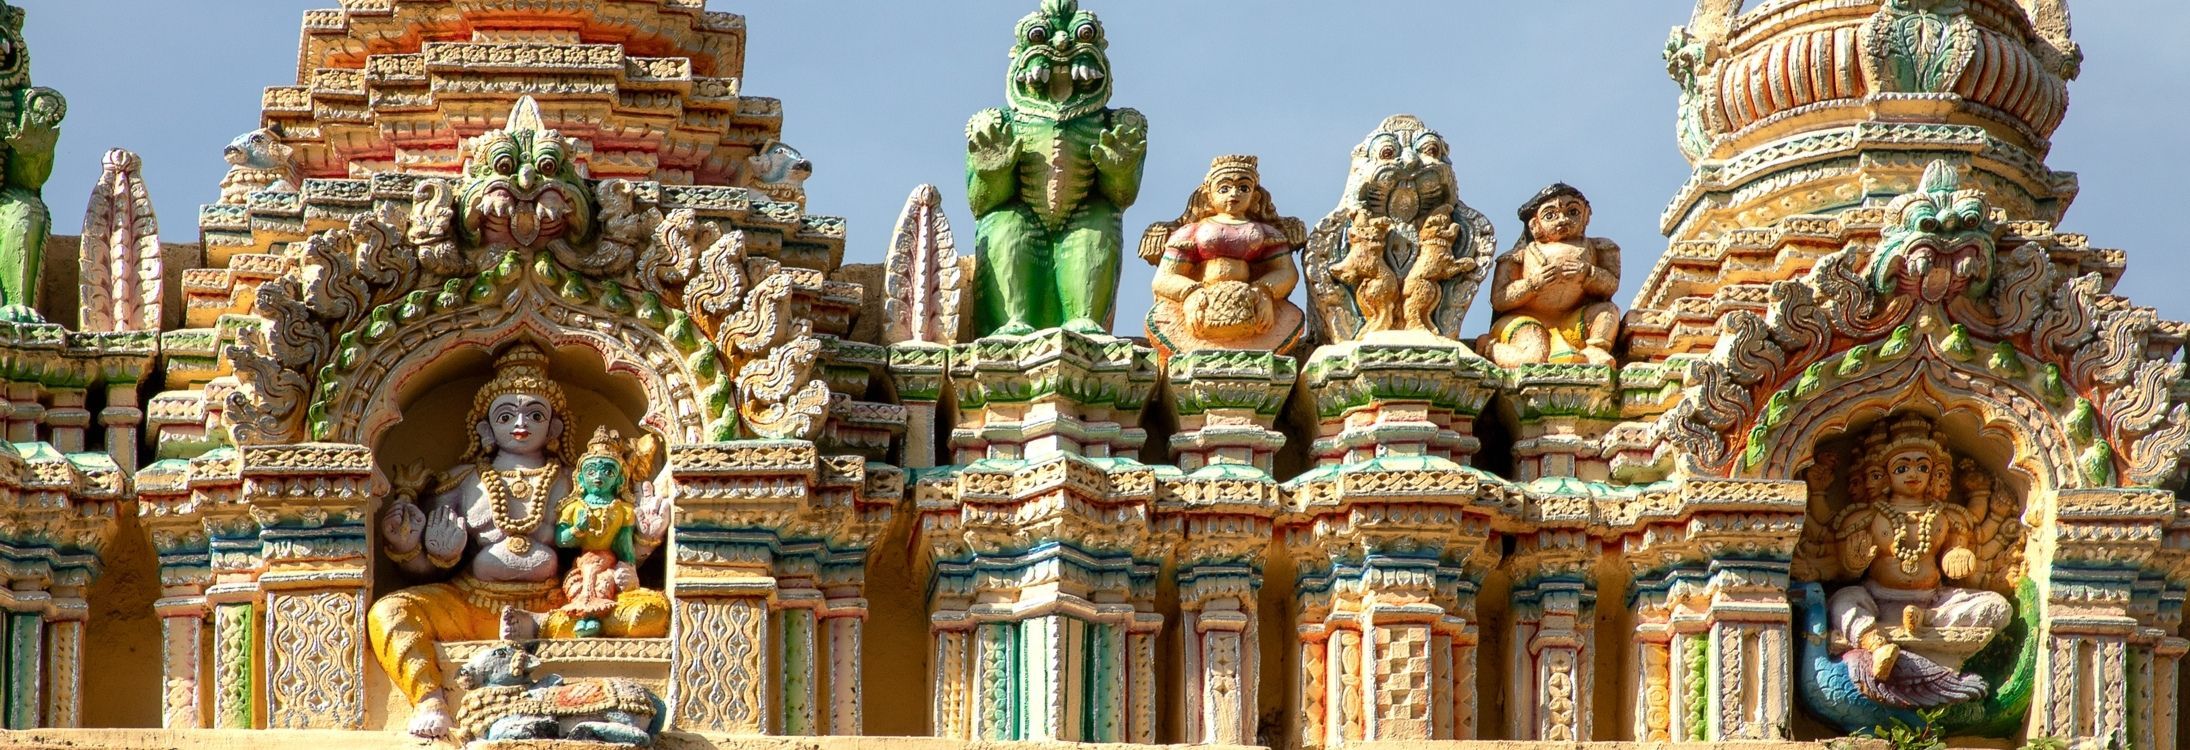 Dodda Basavana Gudi Temple